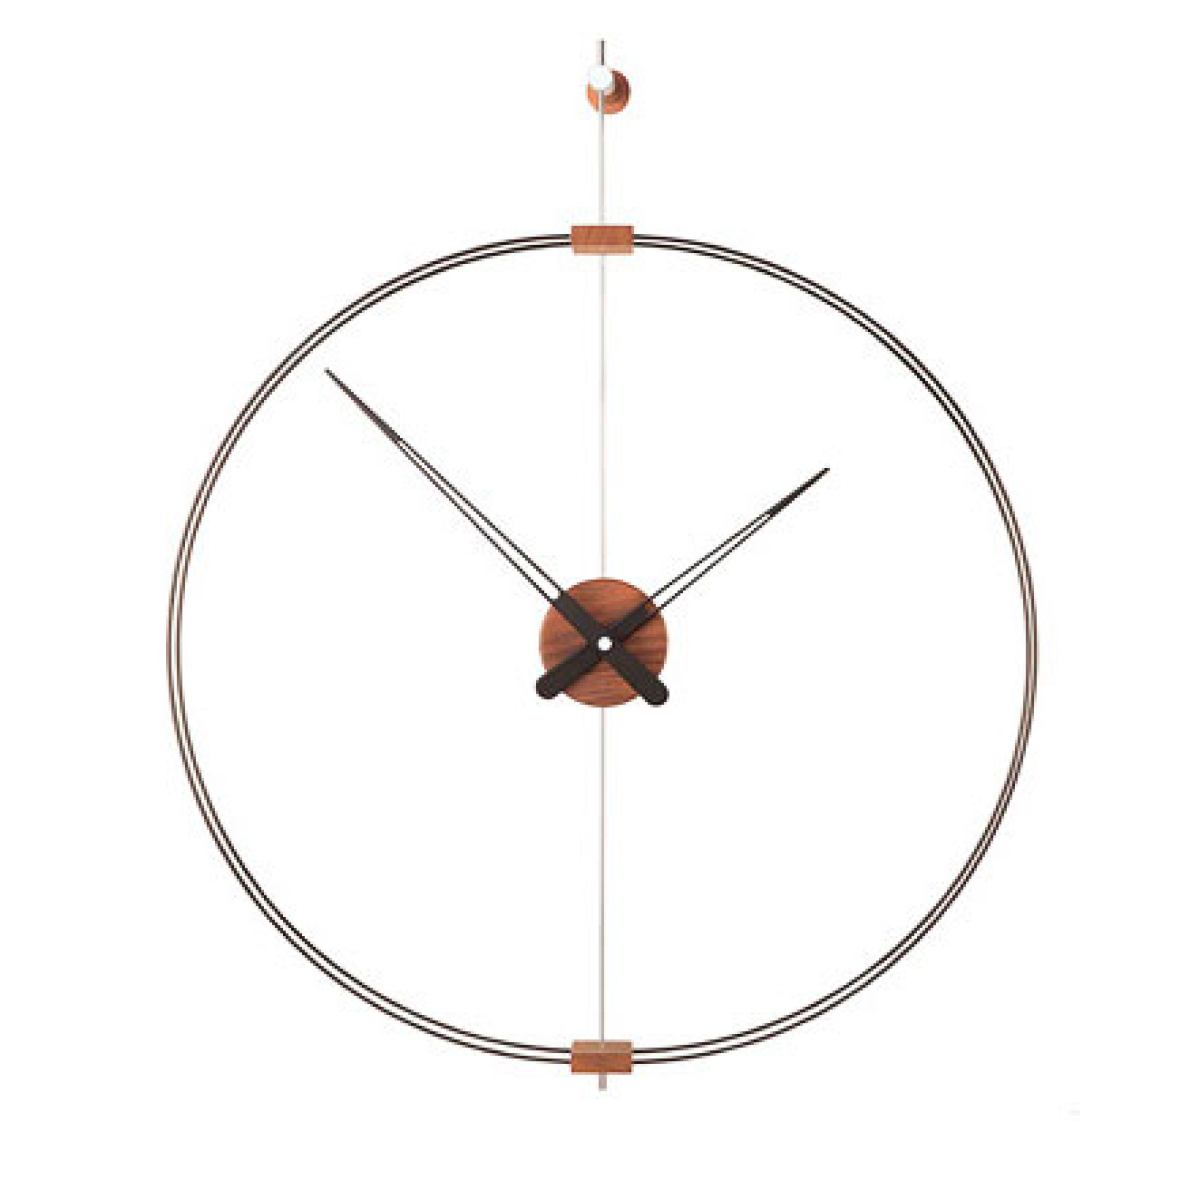 Iconic Double Ring Design Wall Clock "Mini Barcelona" Ø 66 cm